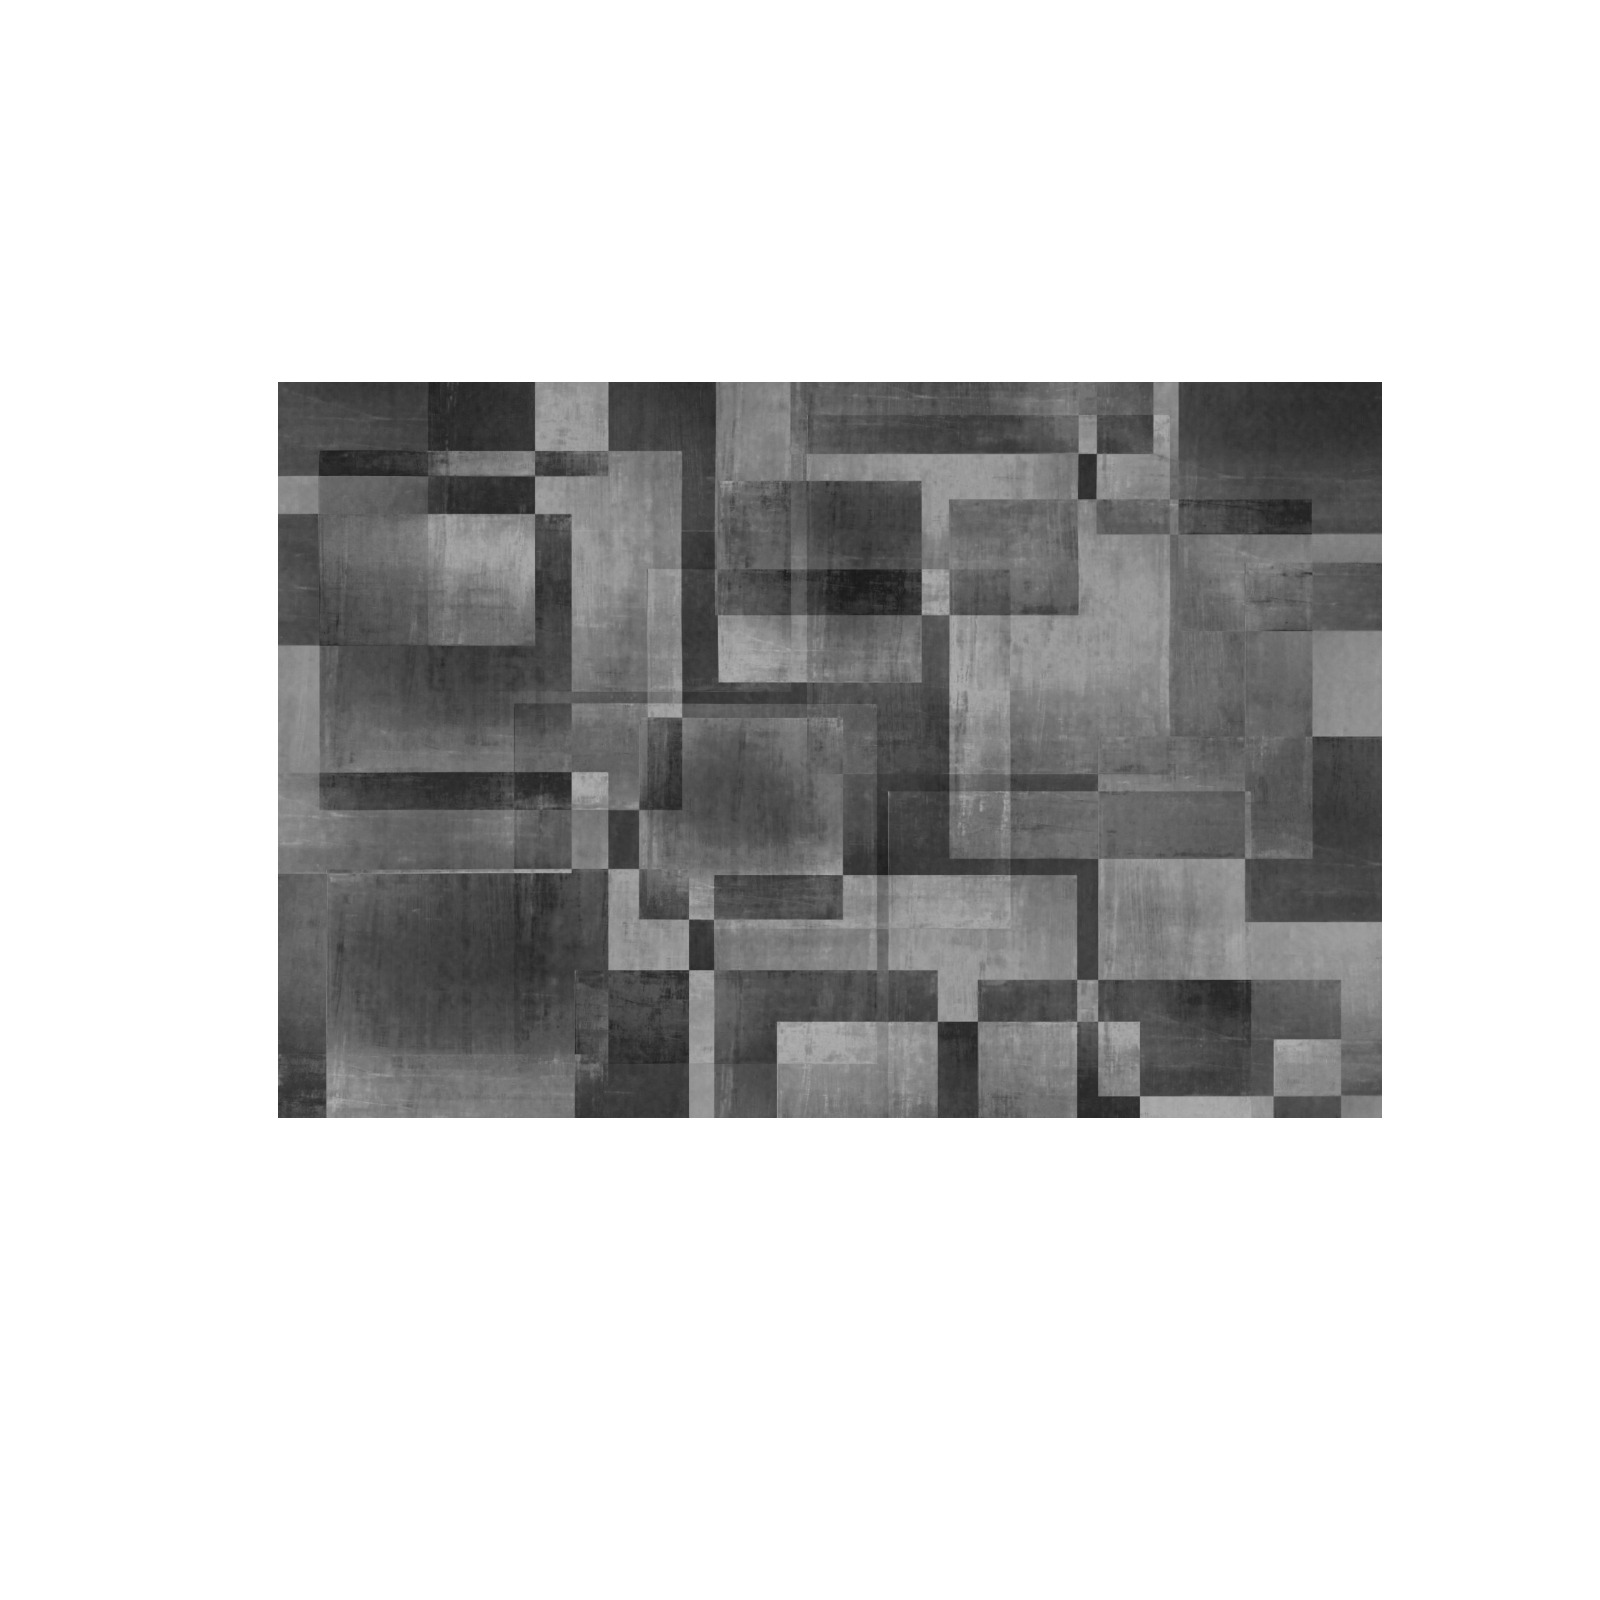 cubes black Frame Canvas Print 48"x32"